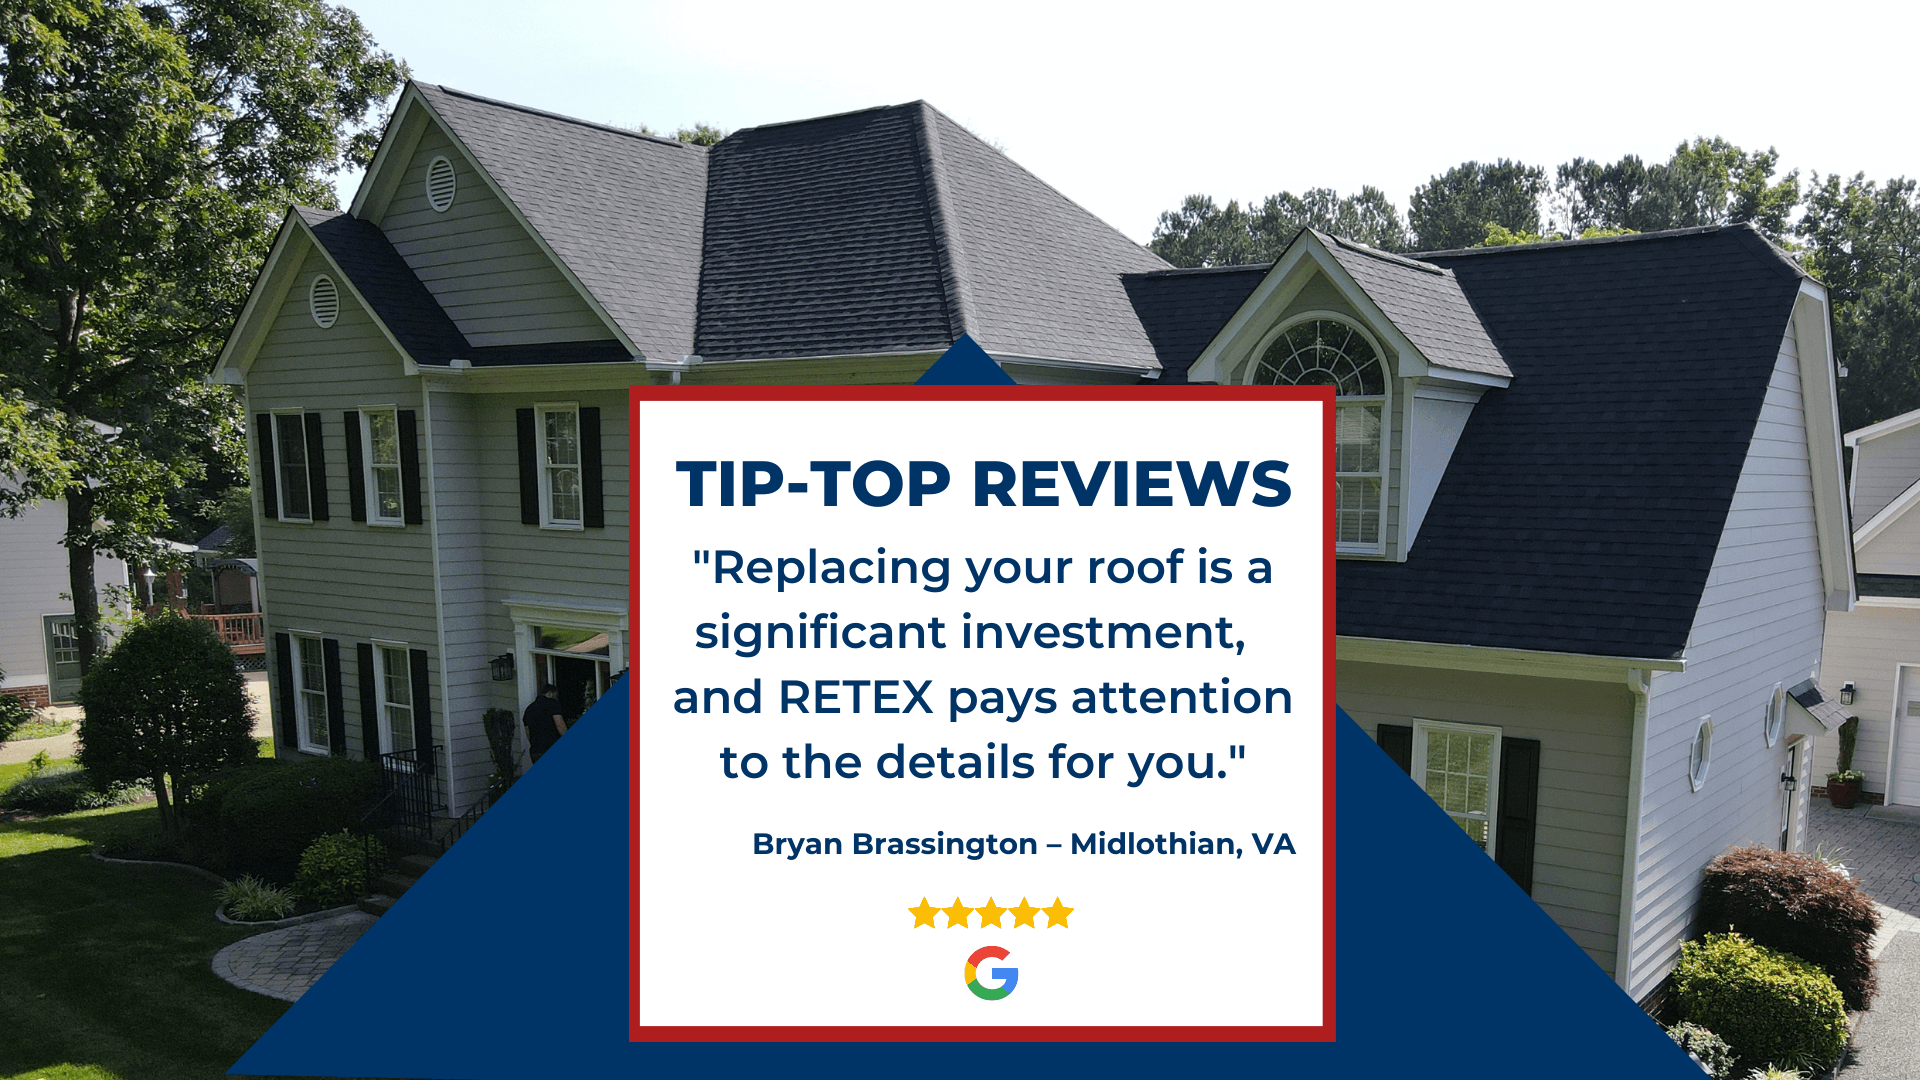 Retex roofing & exteriors